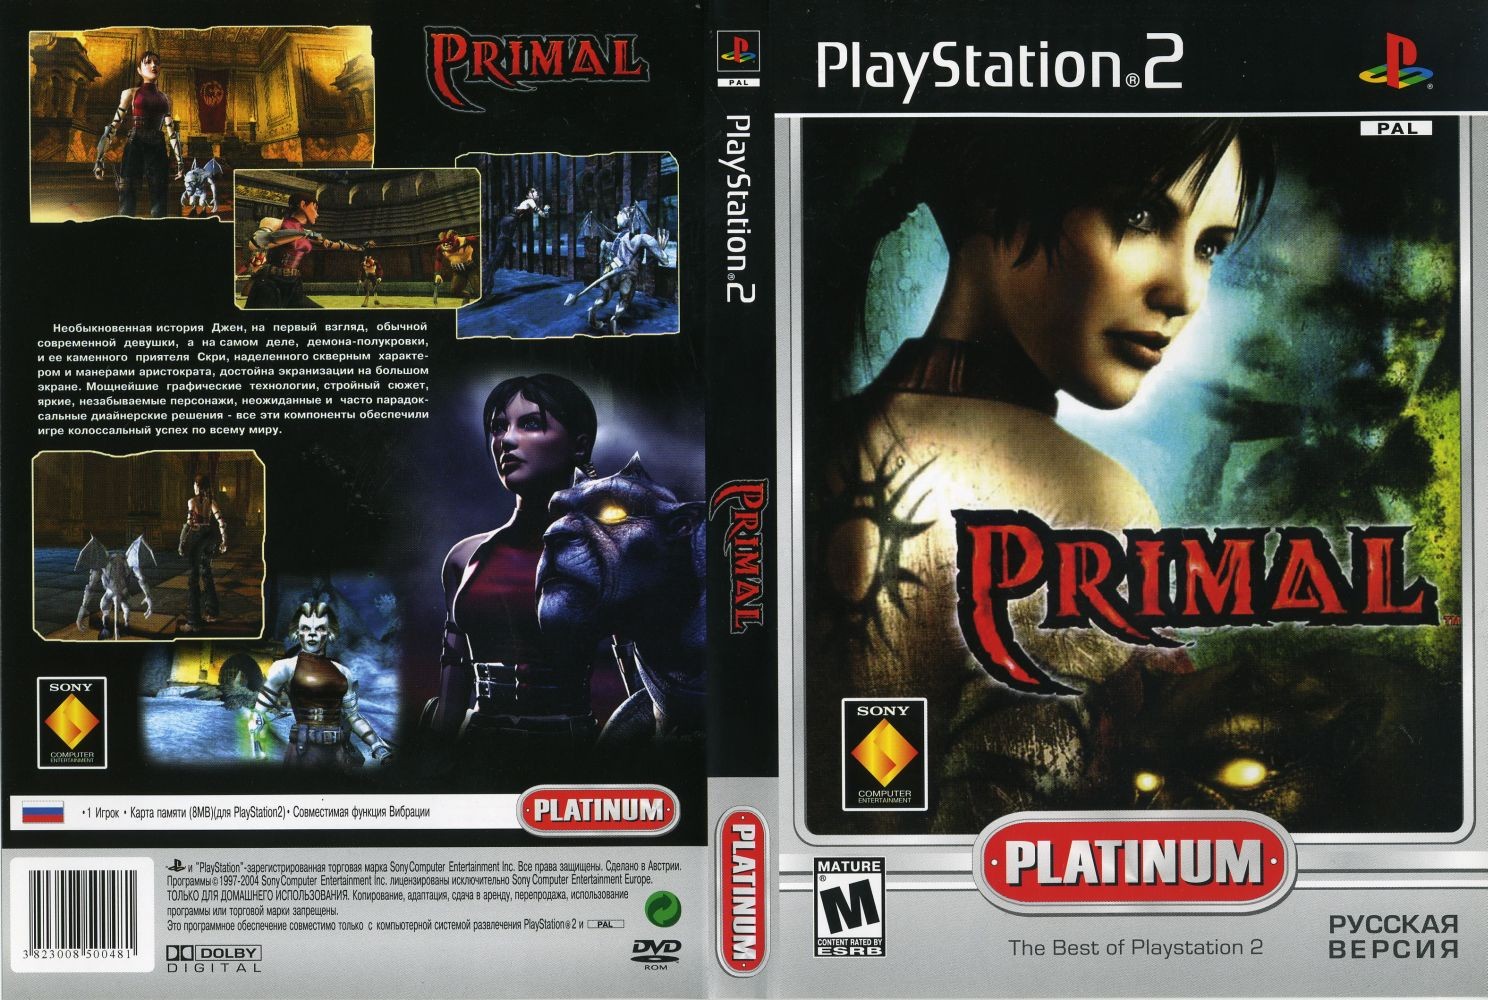 Playstation rus. Primal ps2 обложка. Primal игра ps2. Программы PLAYSTATION 2. PLAYSTATION 2 Platinum.